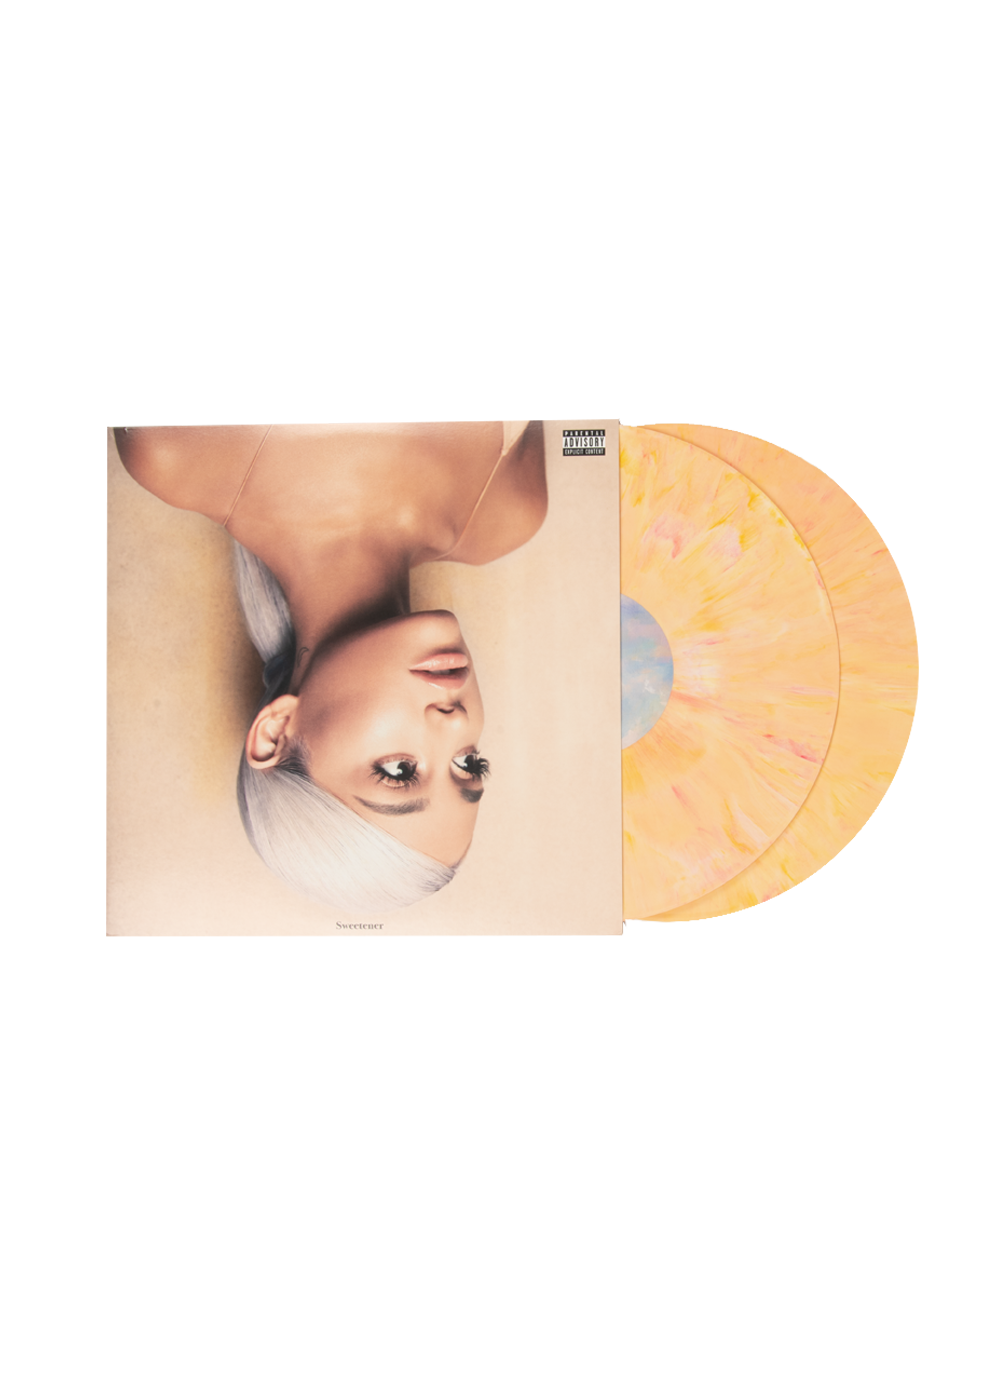 sweetener 2lp (peach colored opaque) – Ariana Grande | Shop